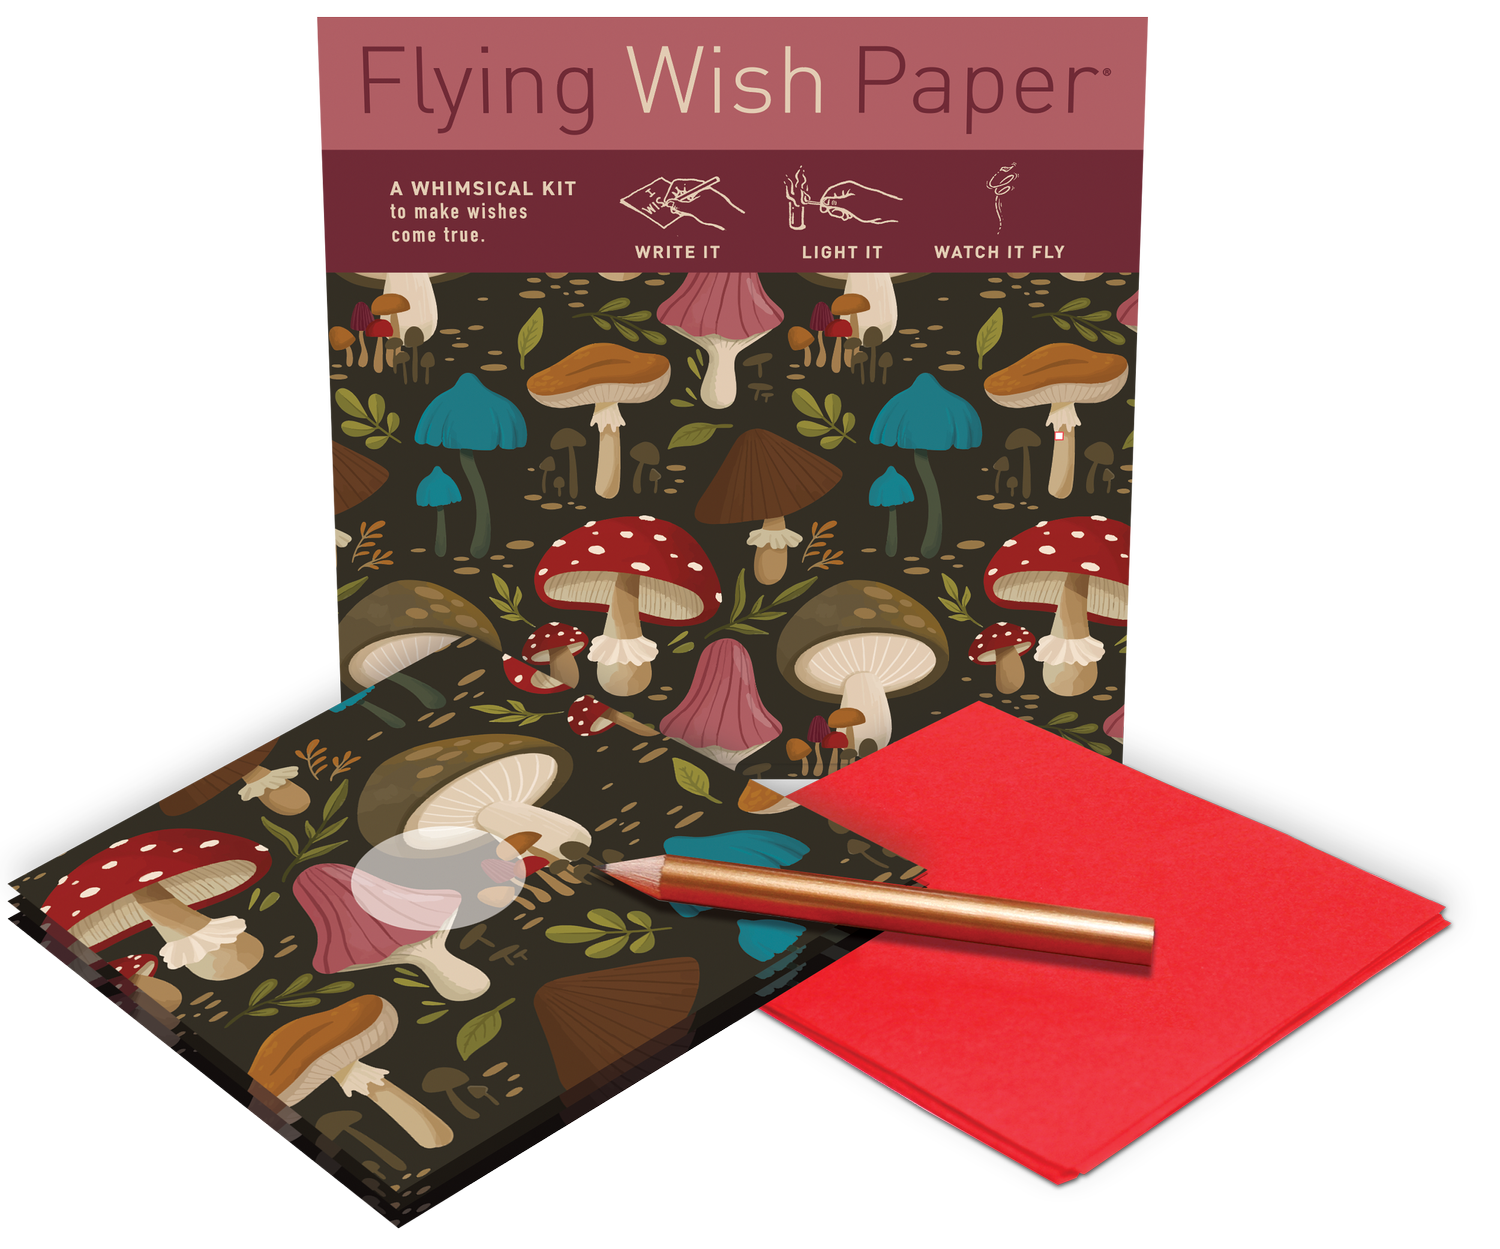 Flying Wish Paper- Mushrooms